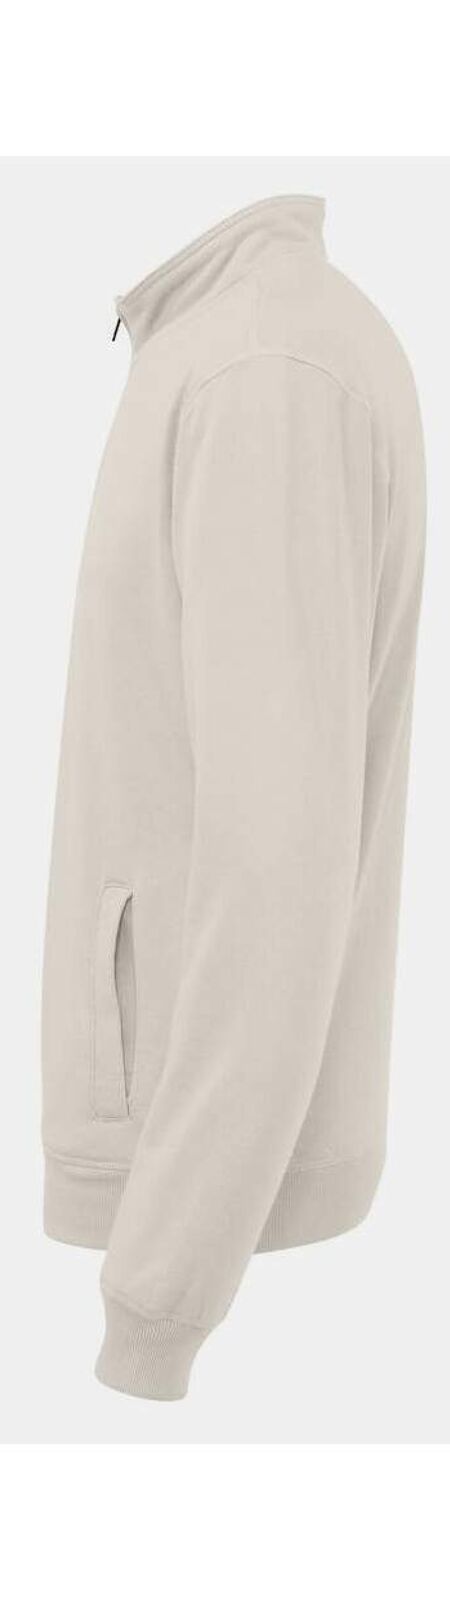 Cottover Unisex Adult Half Zip Sweatshirt (Off White)